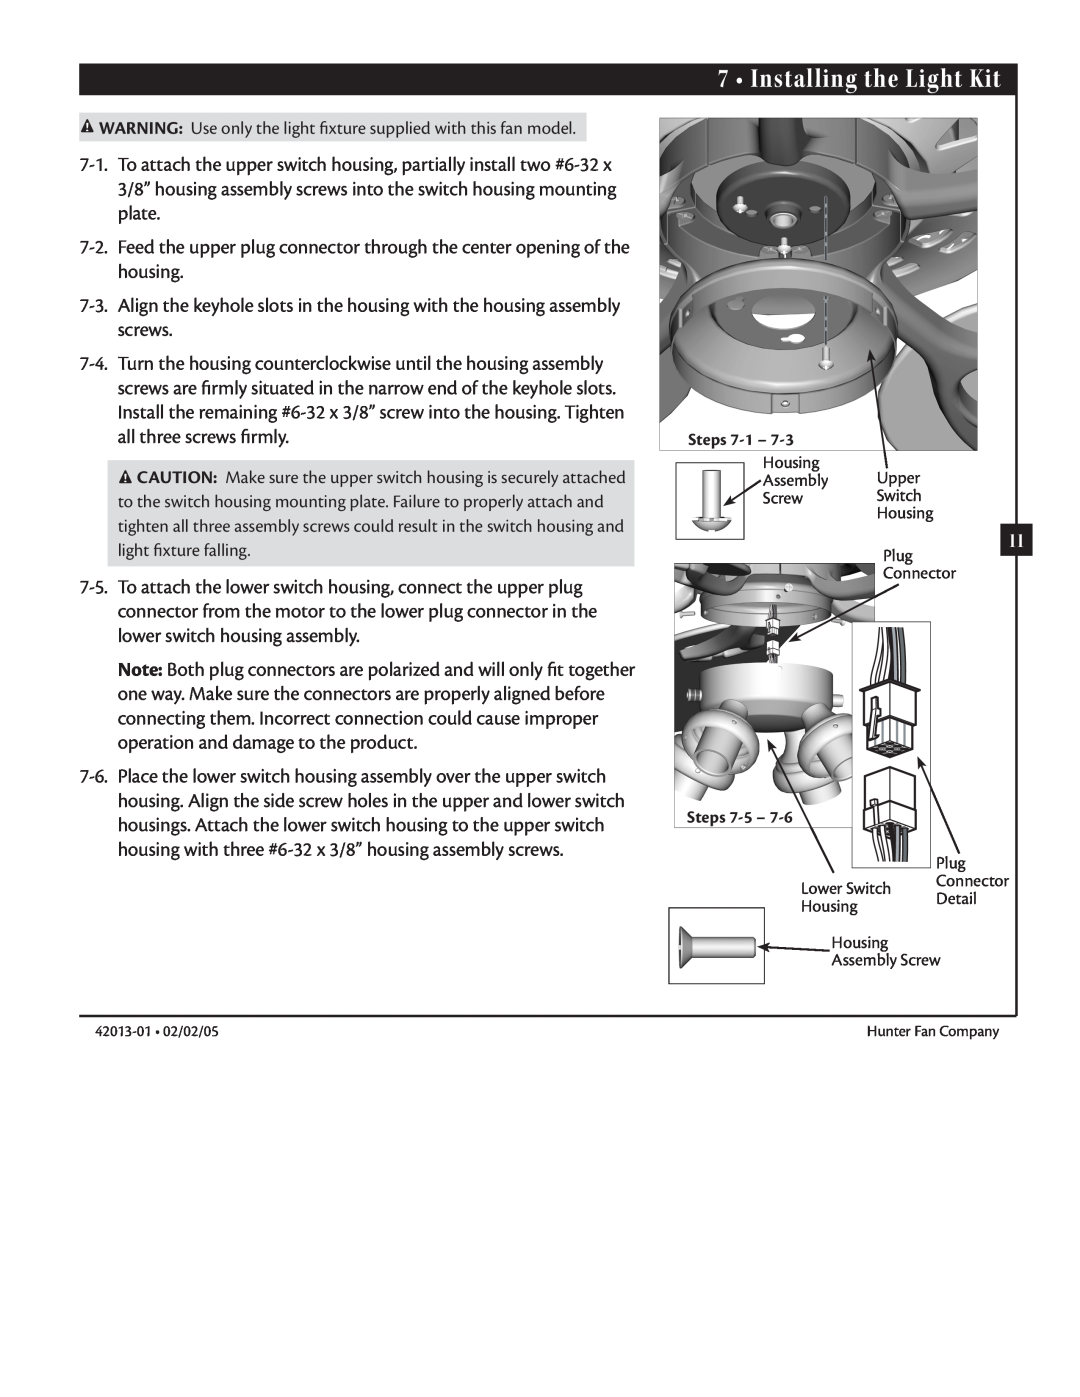 Hunter Fan 42013-01 manual Installing the Light Kit, Steps 